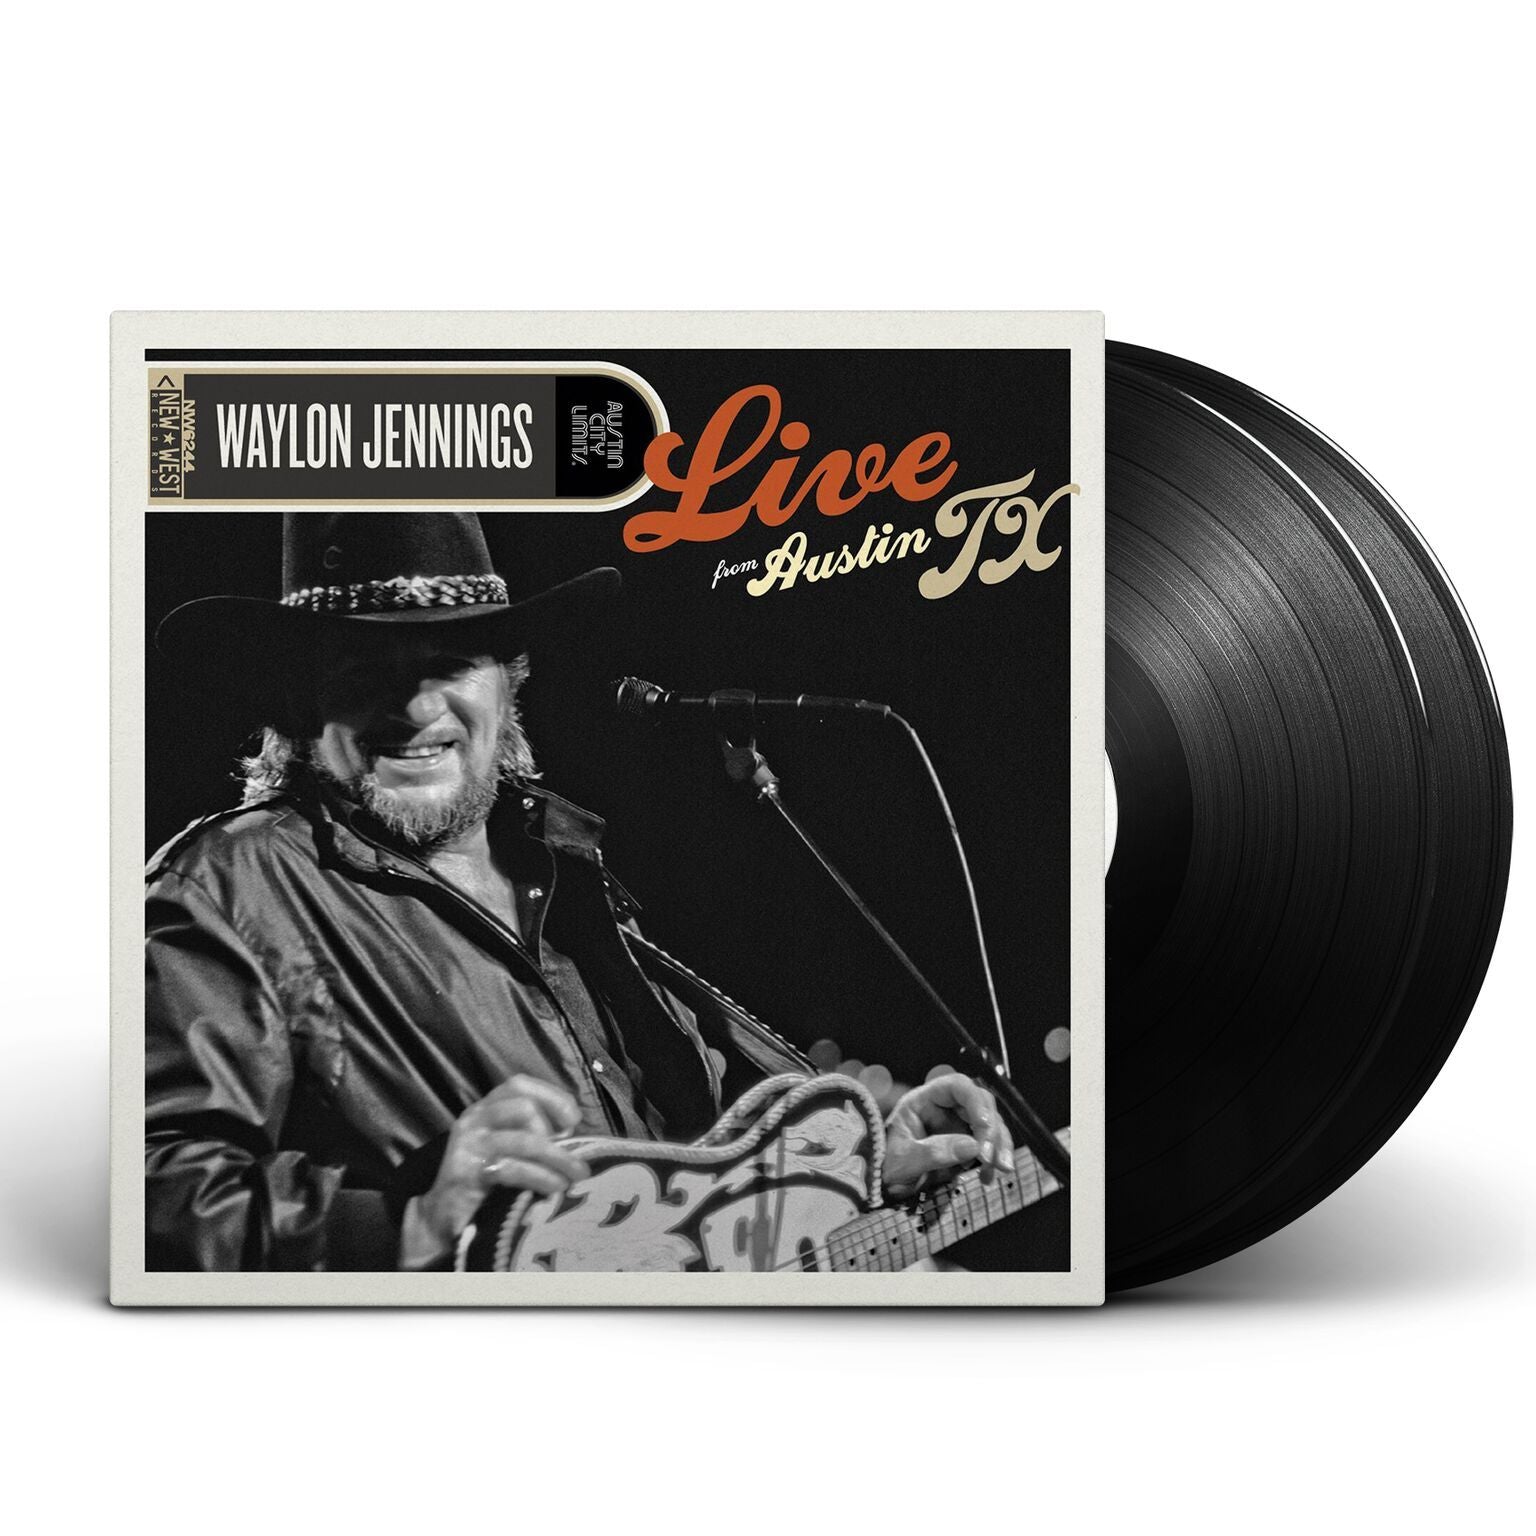 Waylon Jennings - Live From Austin, TX [Vinyl]